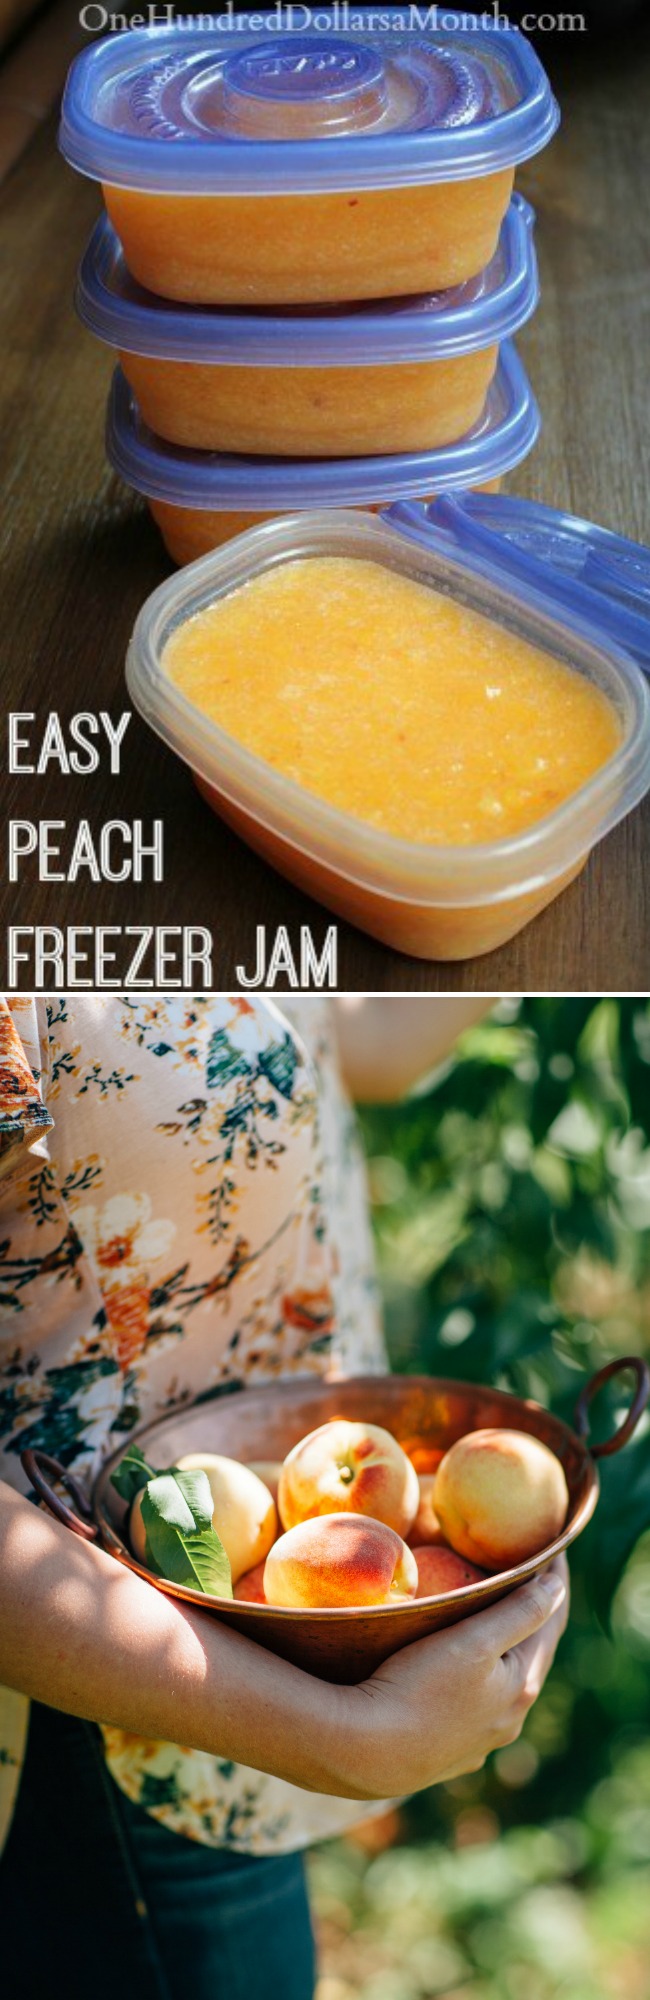 Fast and Easy Peach Freezer Jam